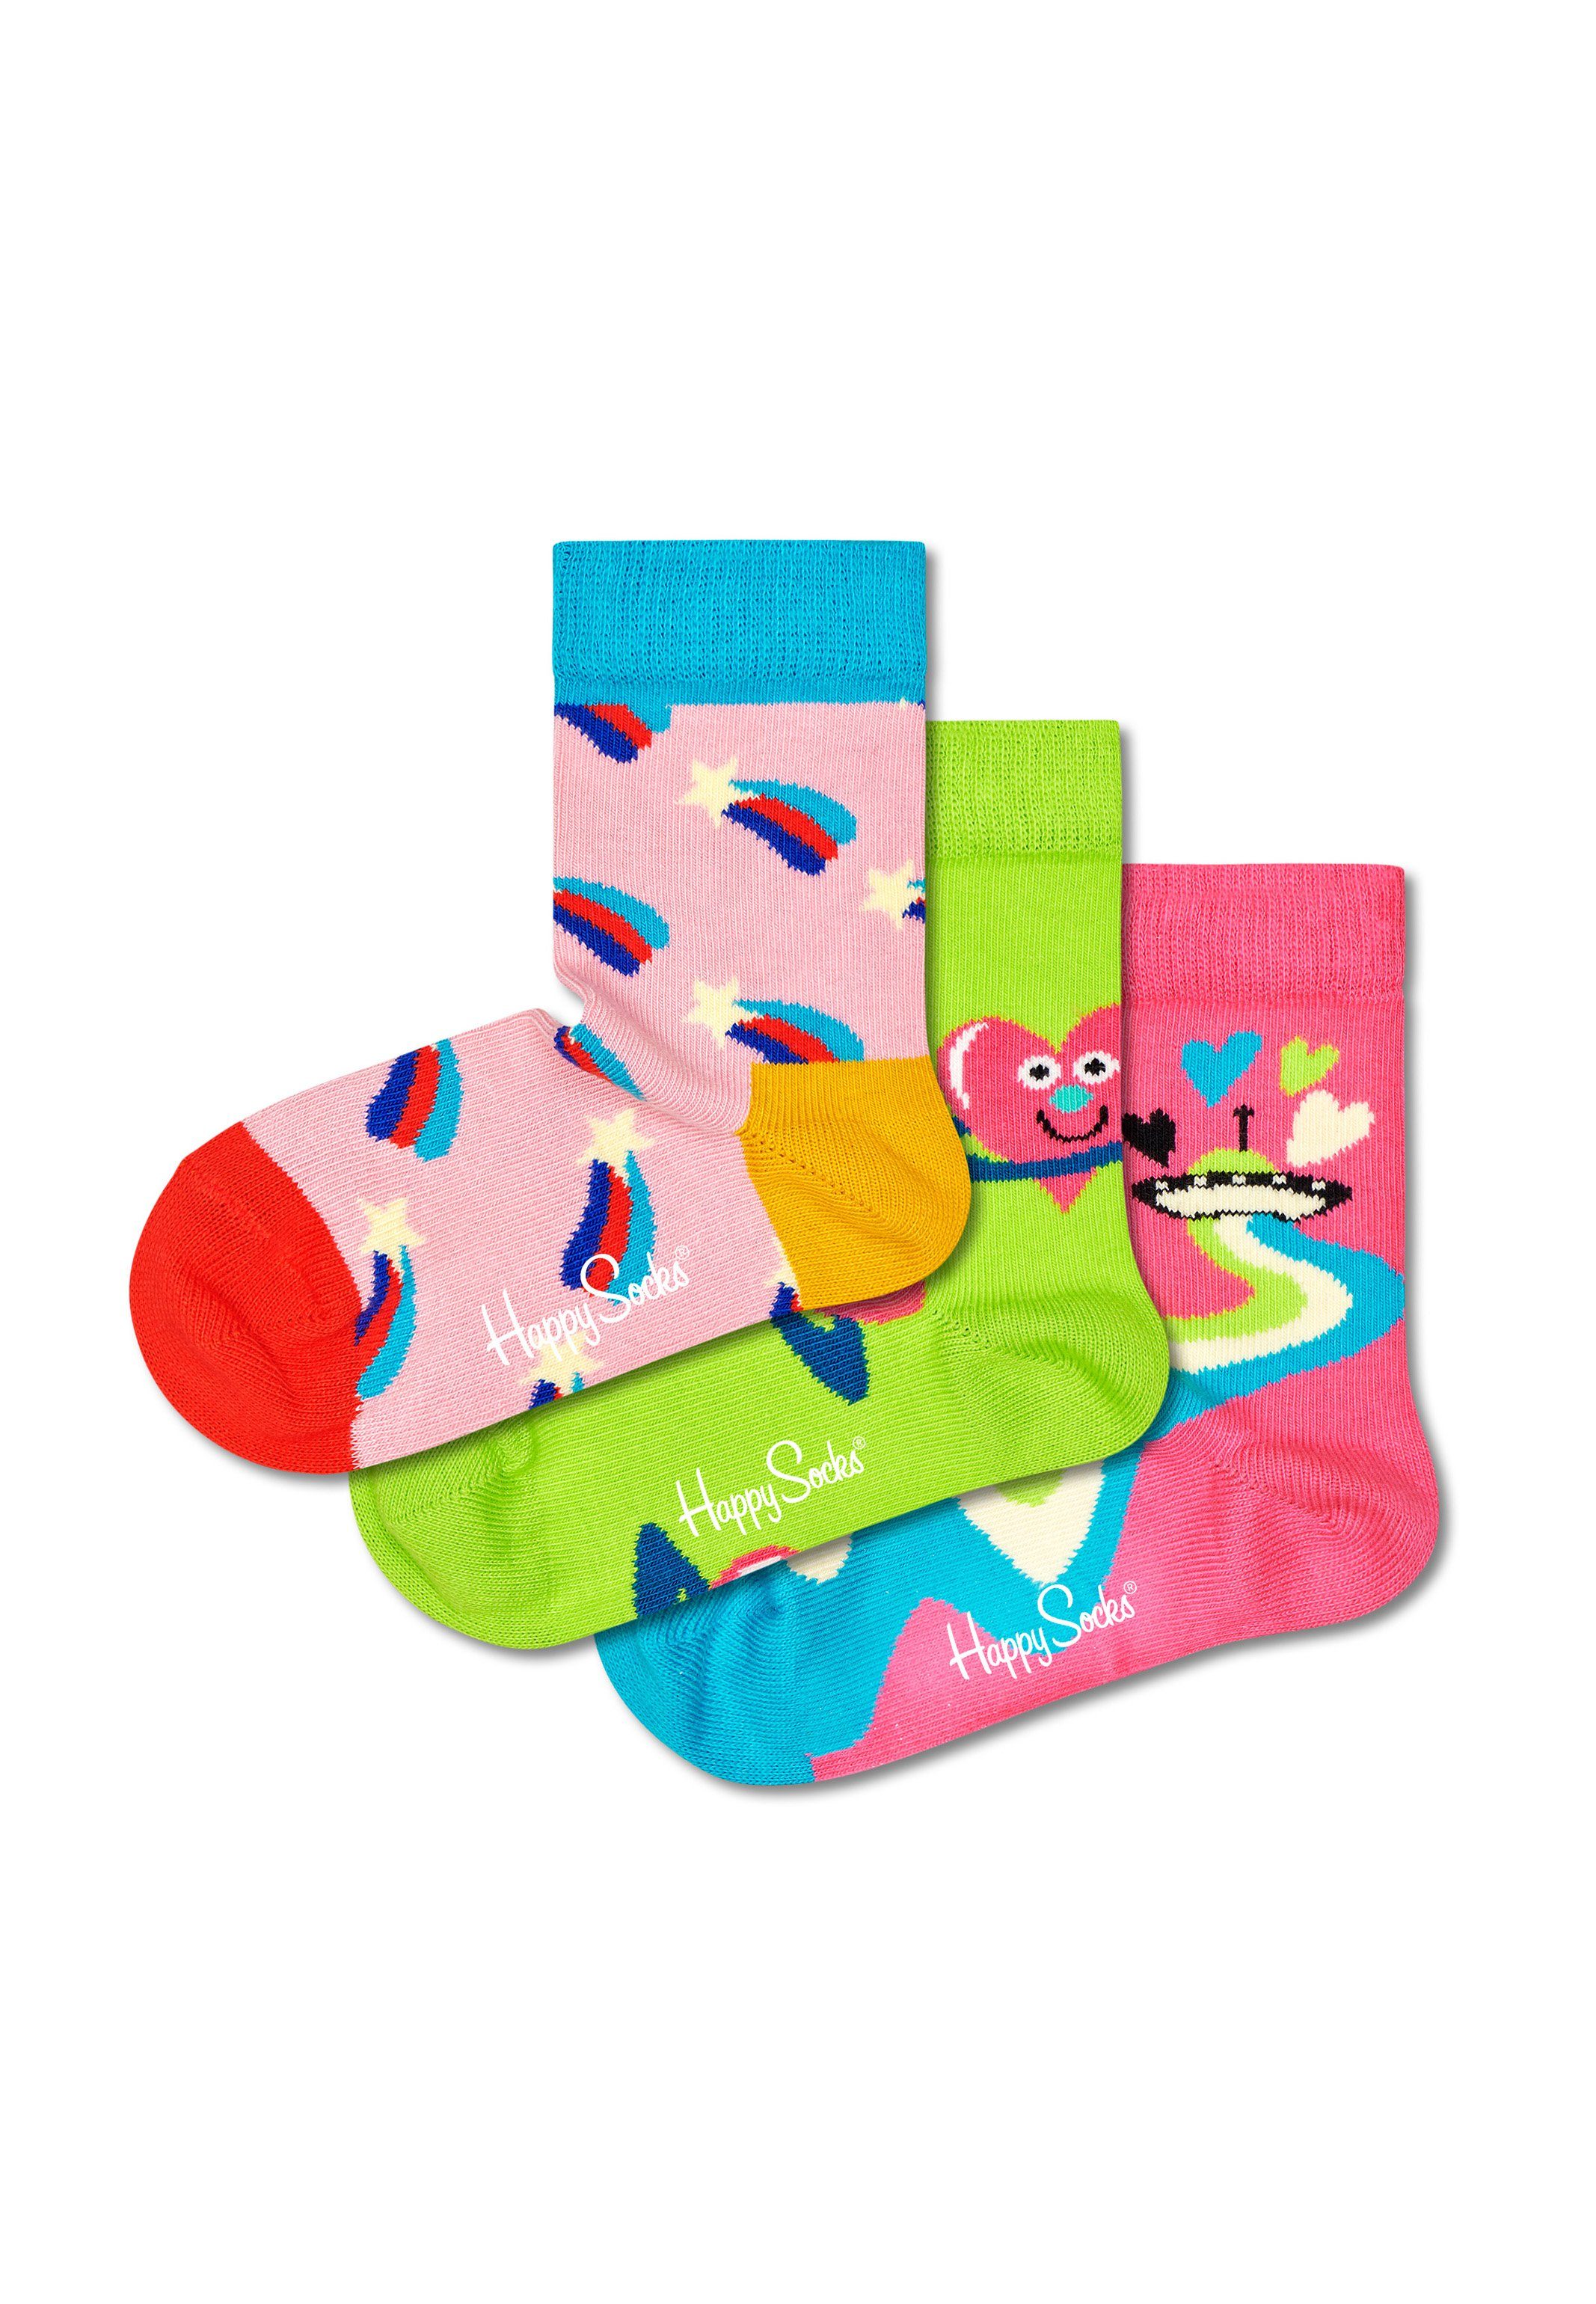 Happy Socks Langsocken - bunte 3 unbekannt and Geschenk Paar Socken Baumwolle (Spar-Set, Paar Geschenkbox in Box Hearts Kids Stars - einer 3 Socken 3-Paar)